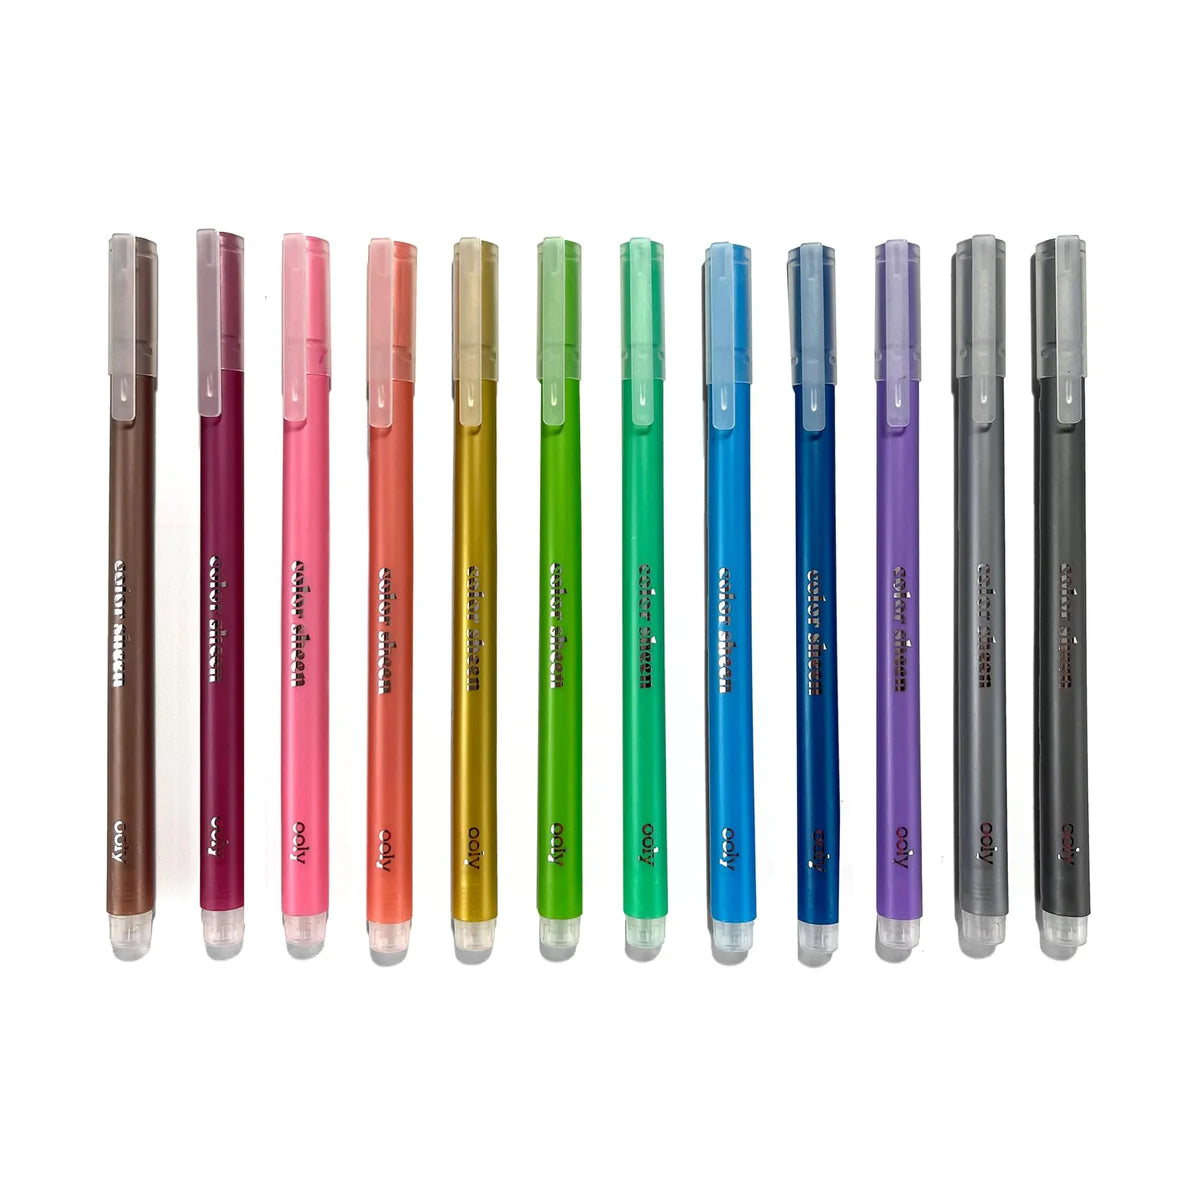 Ooly Colour Sheen Gel Pens